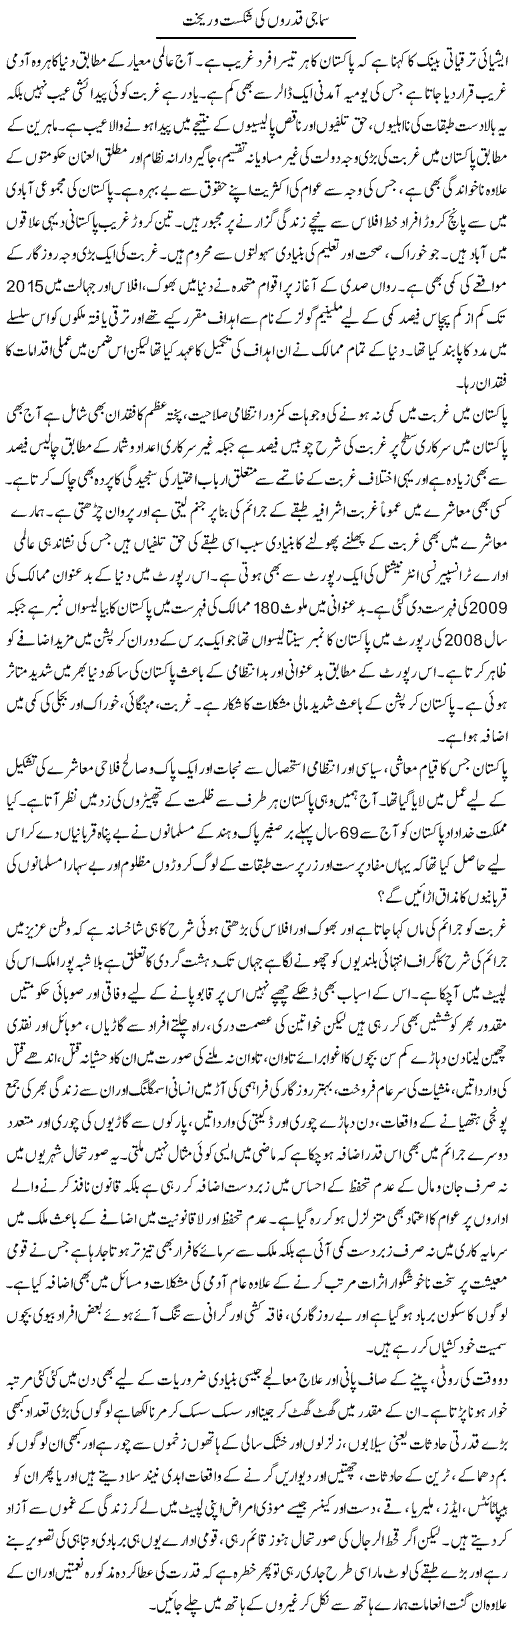 Samaji Qadron Ki Shikast O Reekht | Shaheen Rehman | Daily Urdu Columns